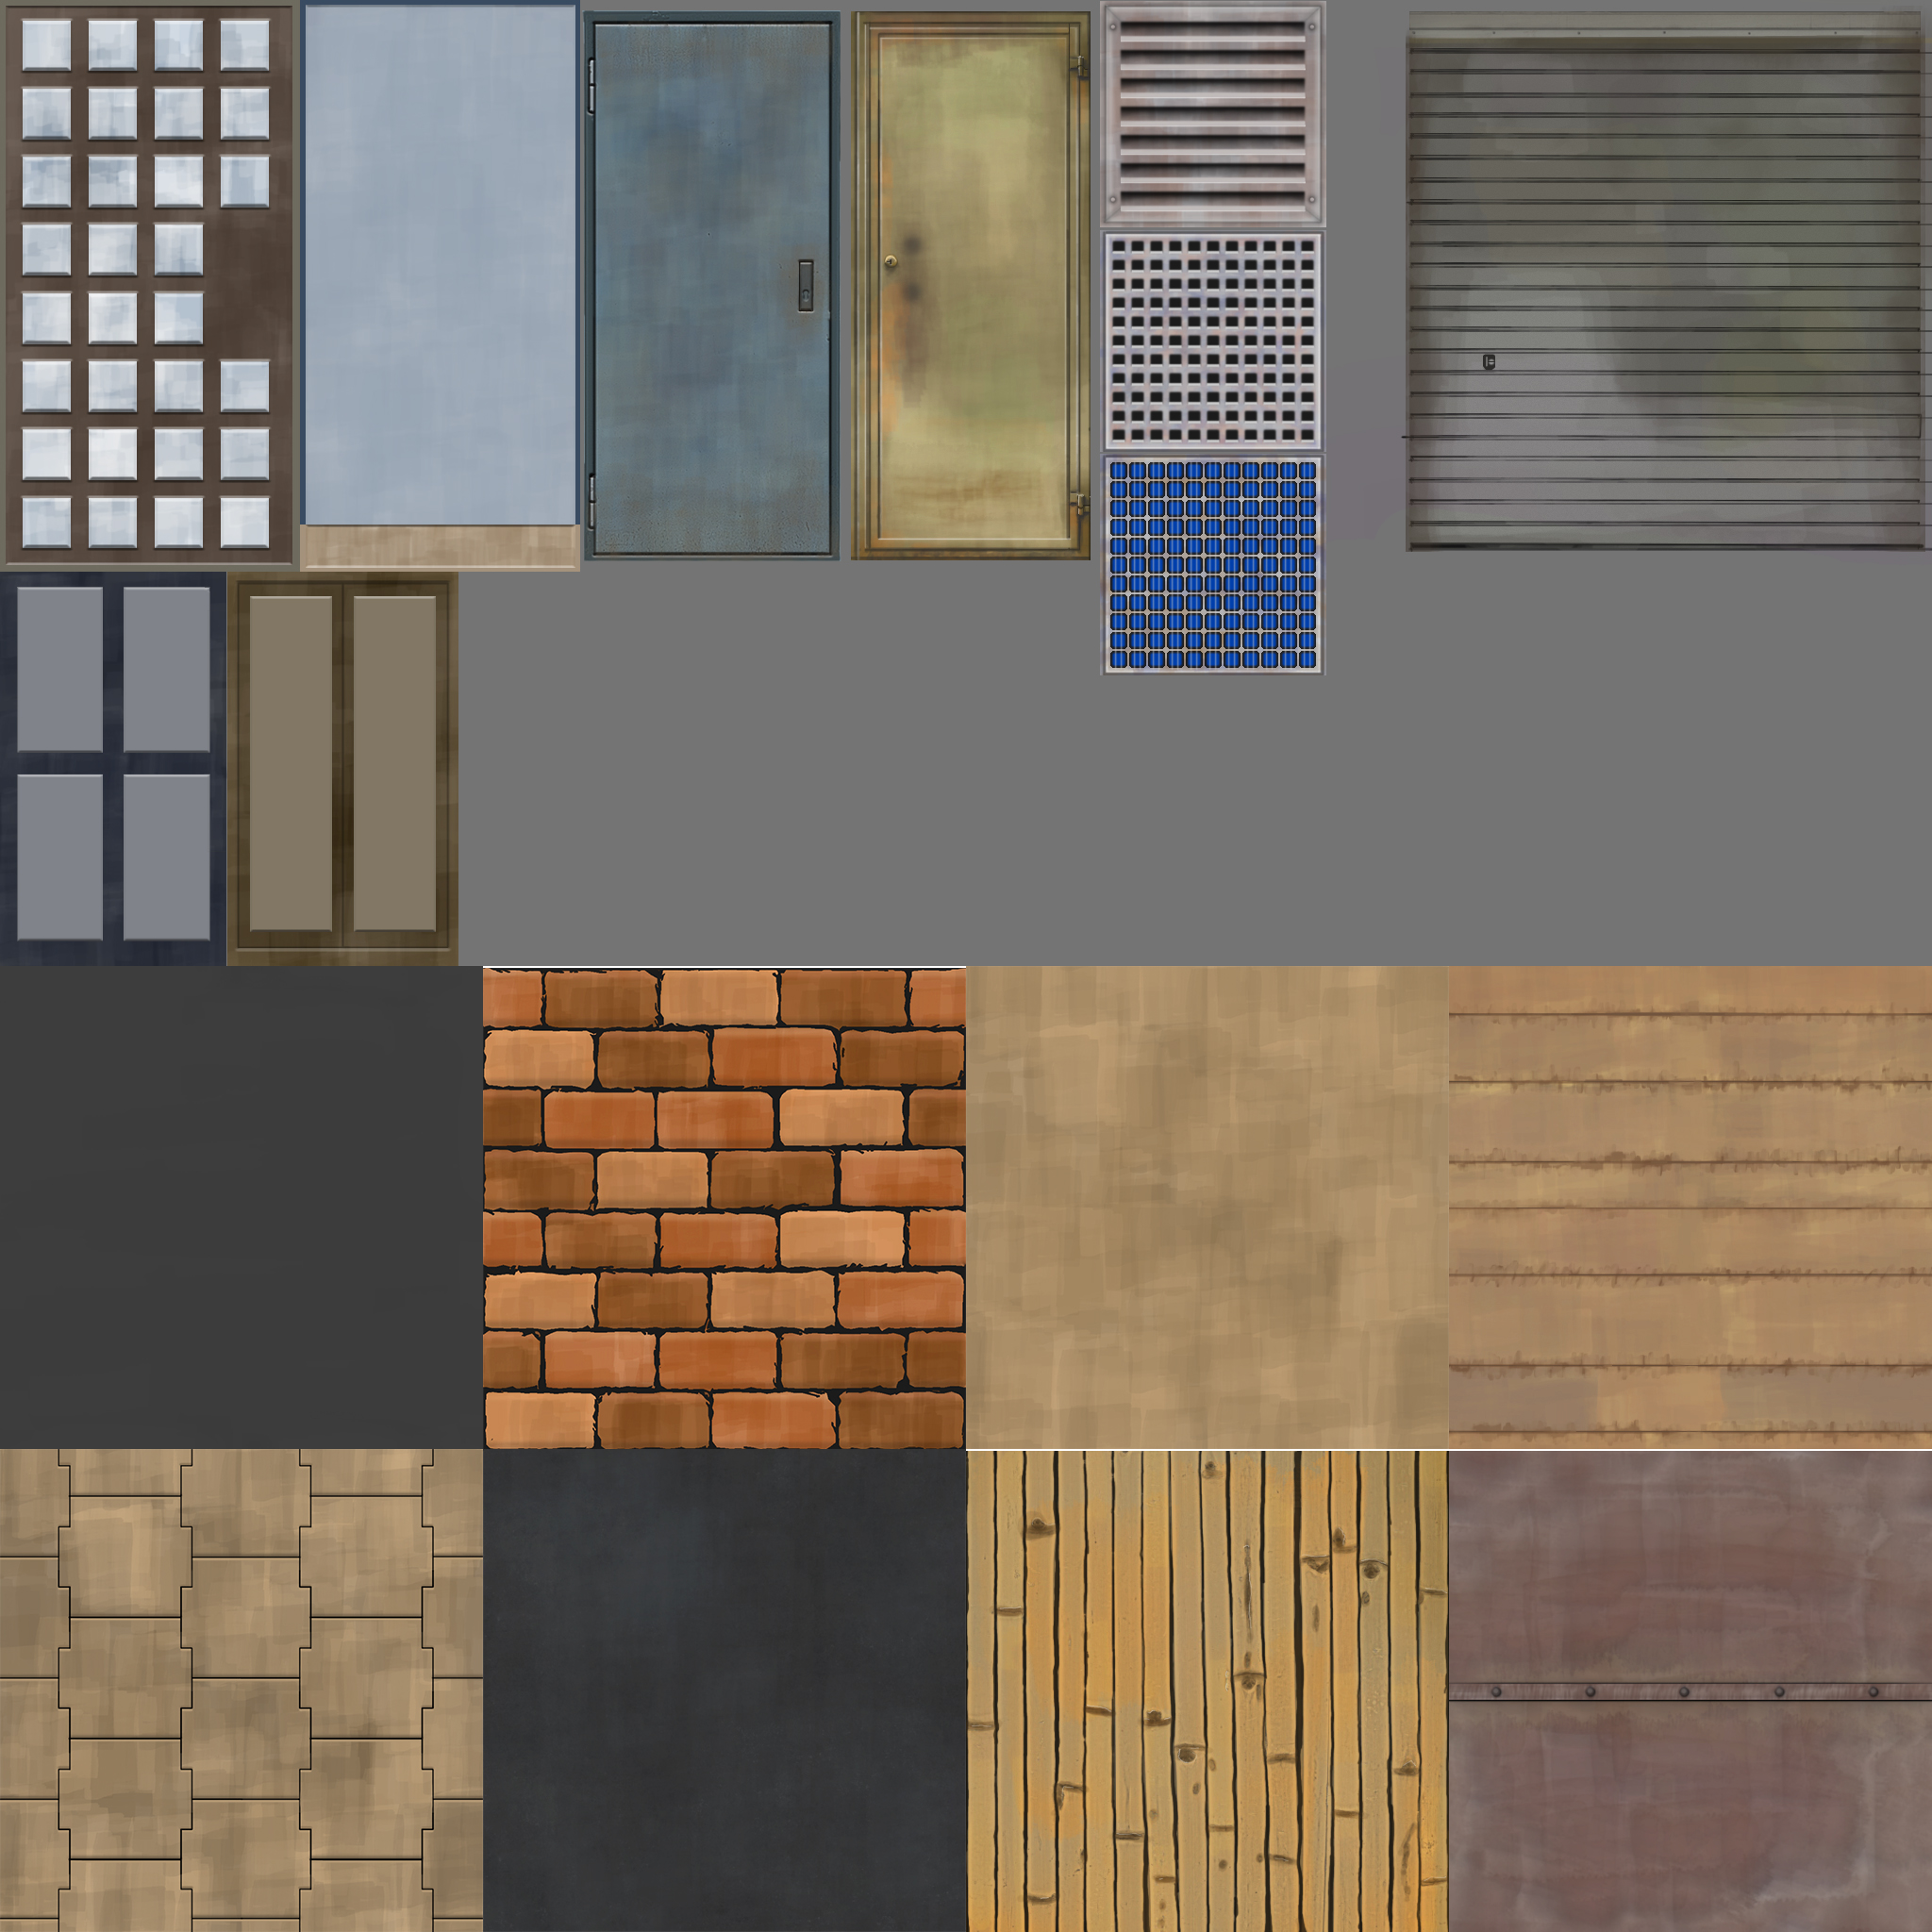 building window texture map